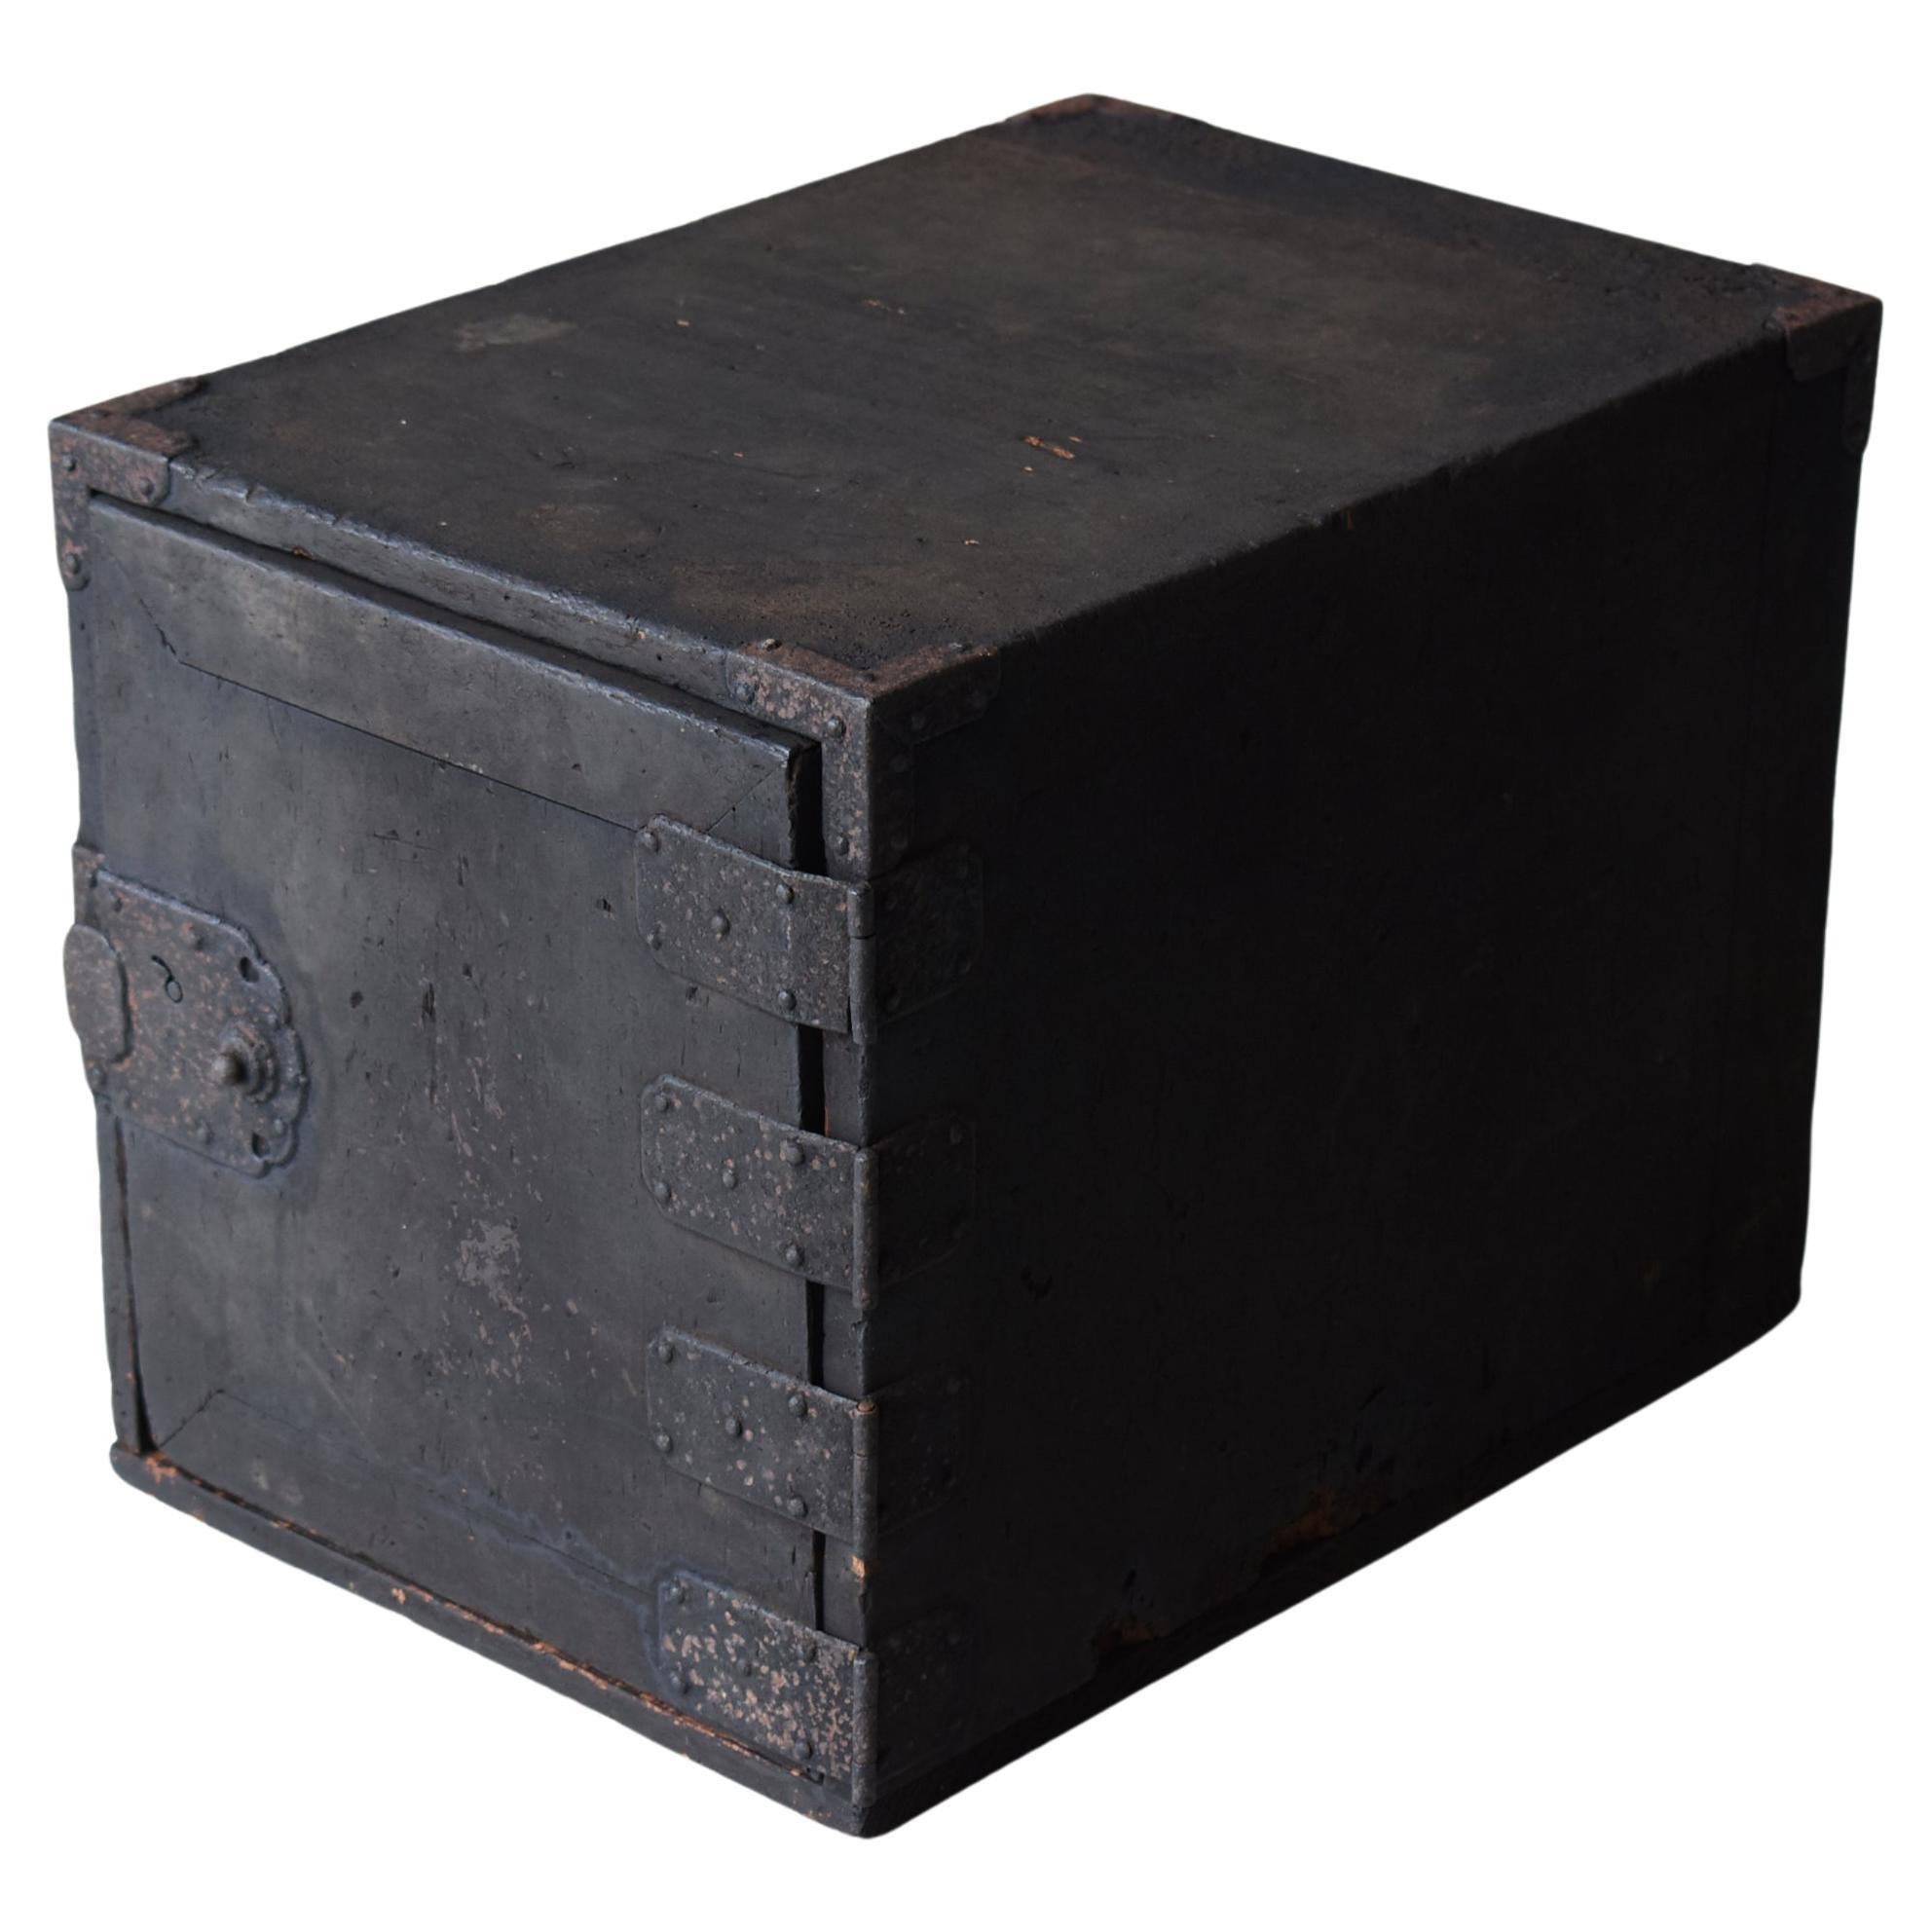 Japanese Antique Black Storage Box 1800s-1860s / Drawer Tansu Wabisabi For Sale